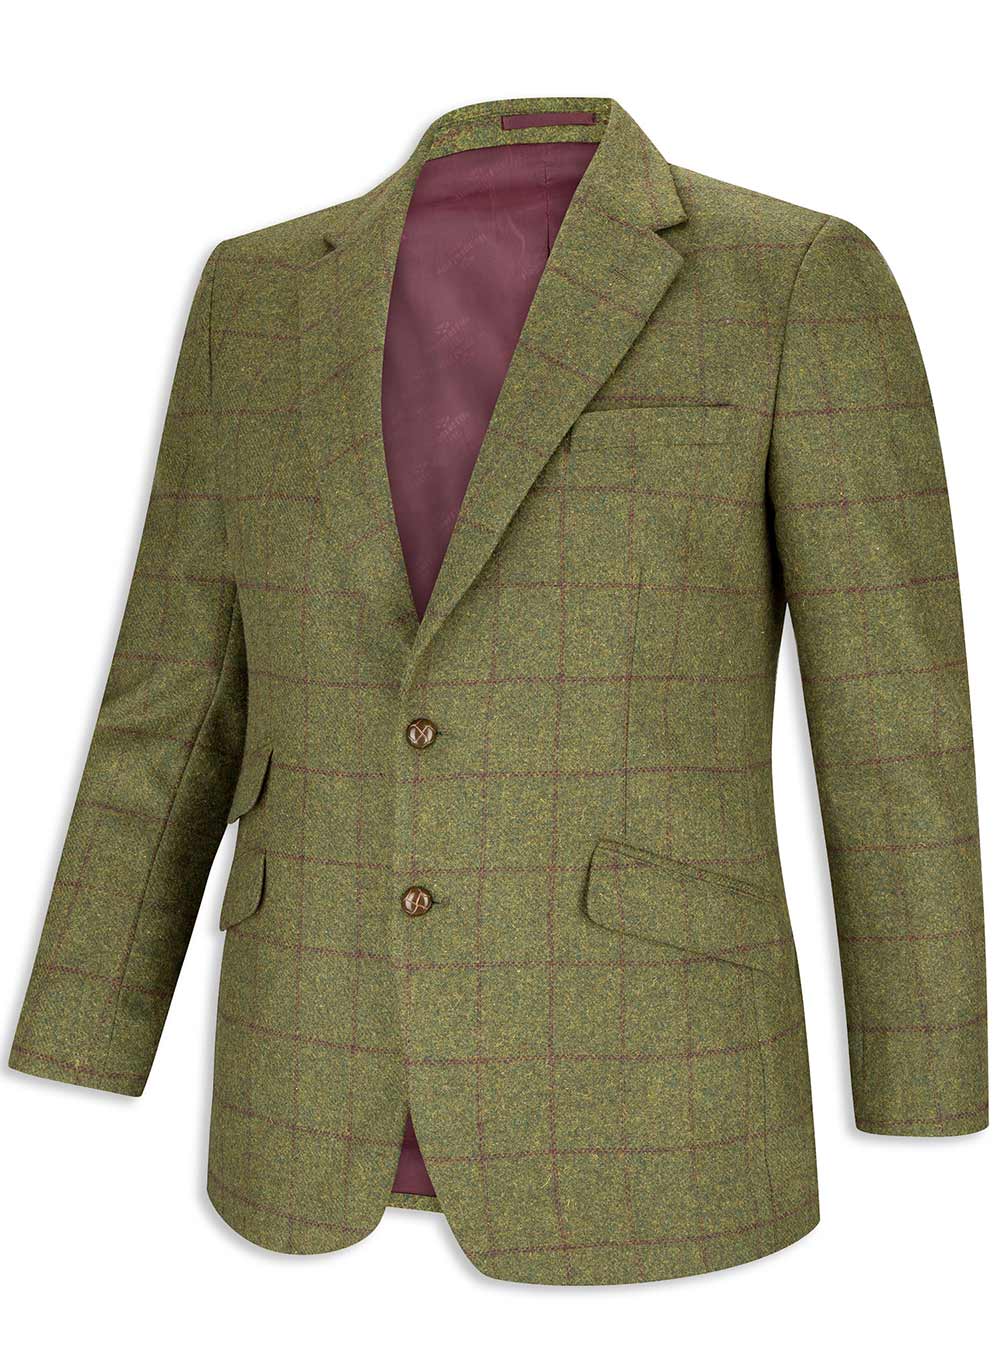 Men's Tweed Jackets, Waistcoats and Blazers